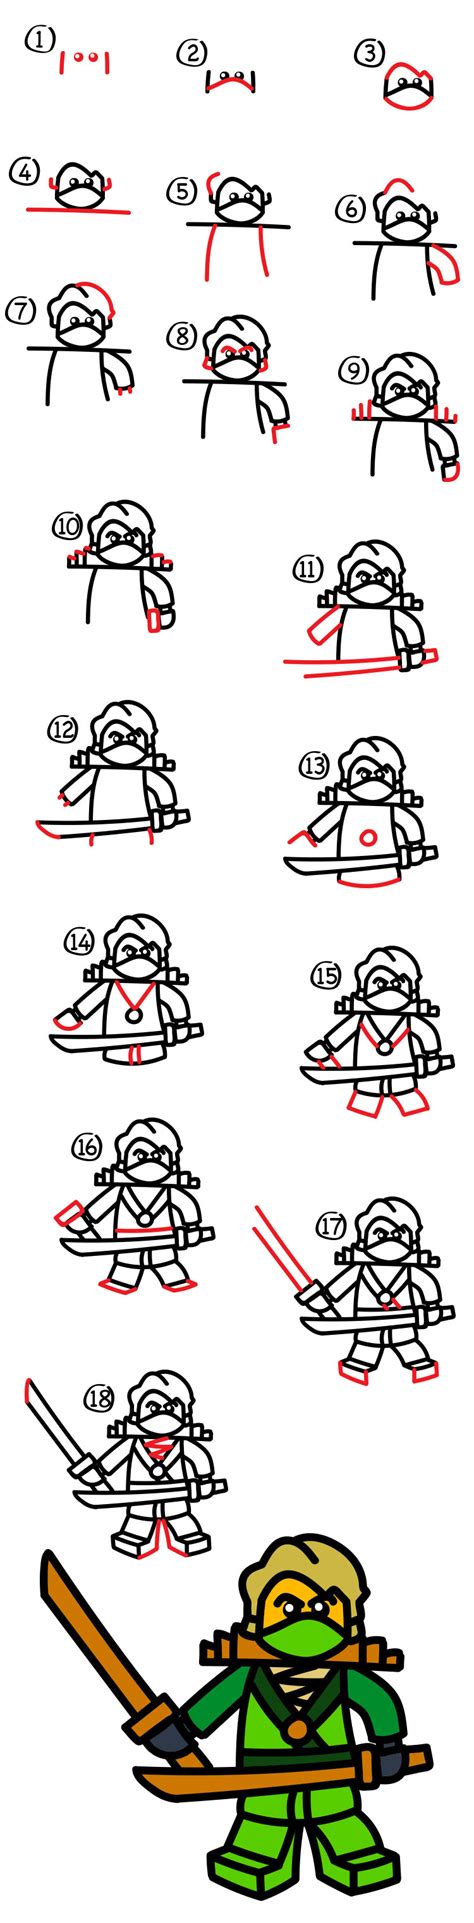 How to draw Lloyd Garmadon from NinjaGO Step by step